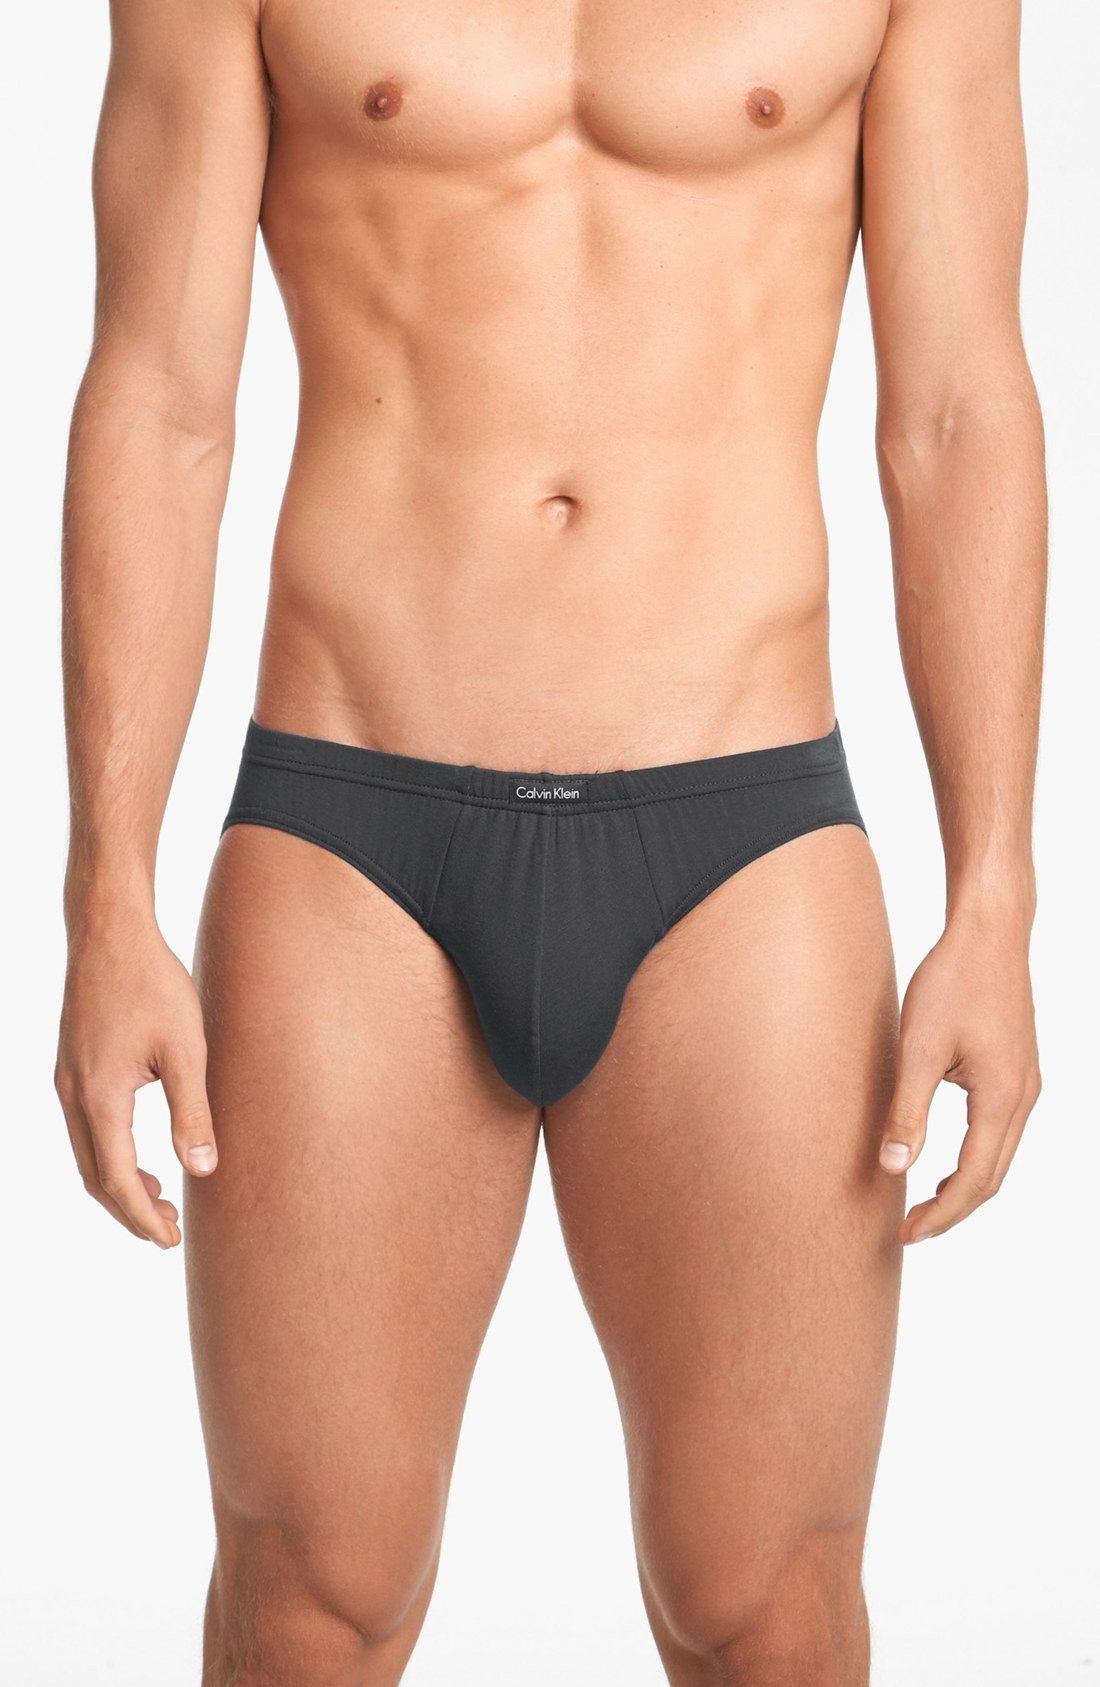 Neptune recommend best of underwear Stafford bikini brief